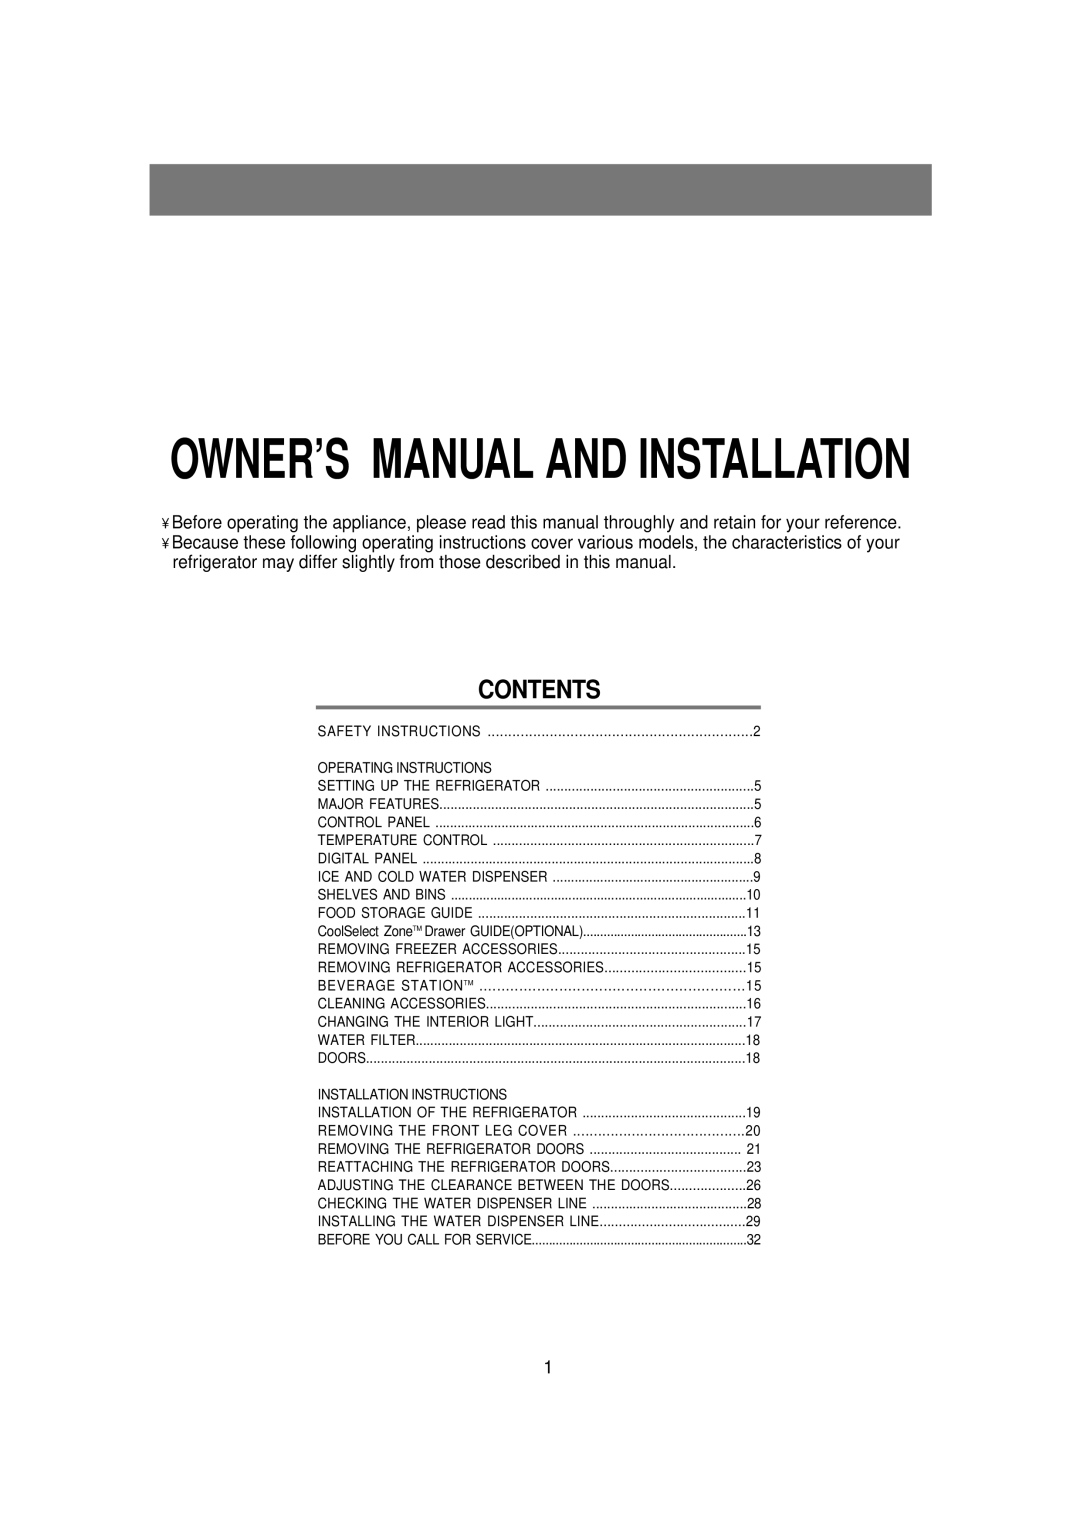 Samsung RSE8KPAS1/BUL manual Contents 